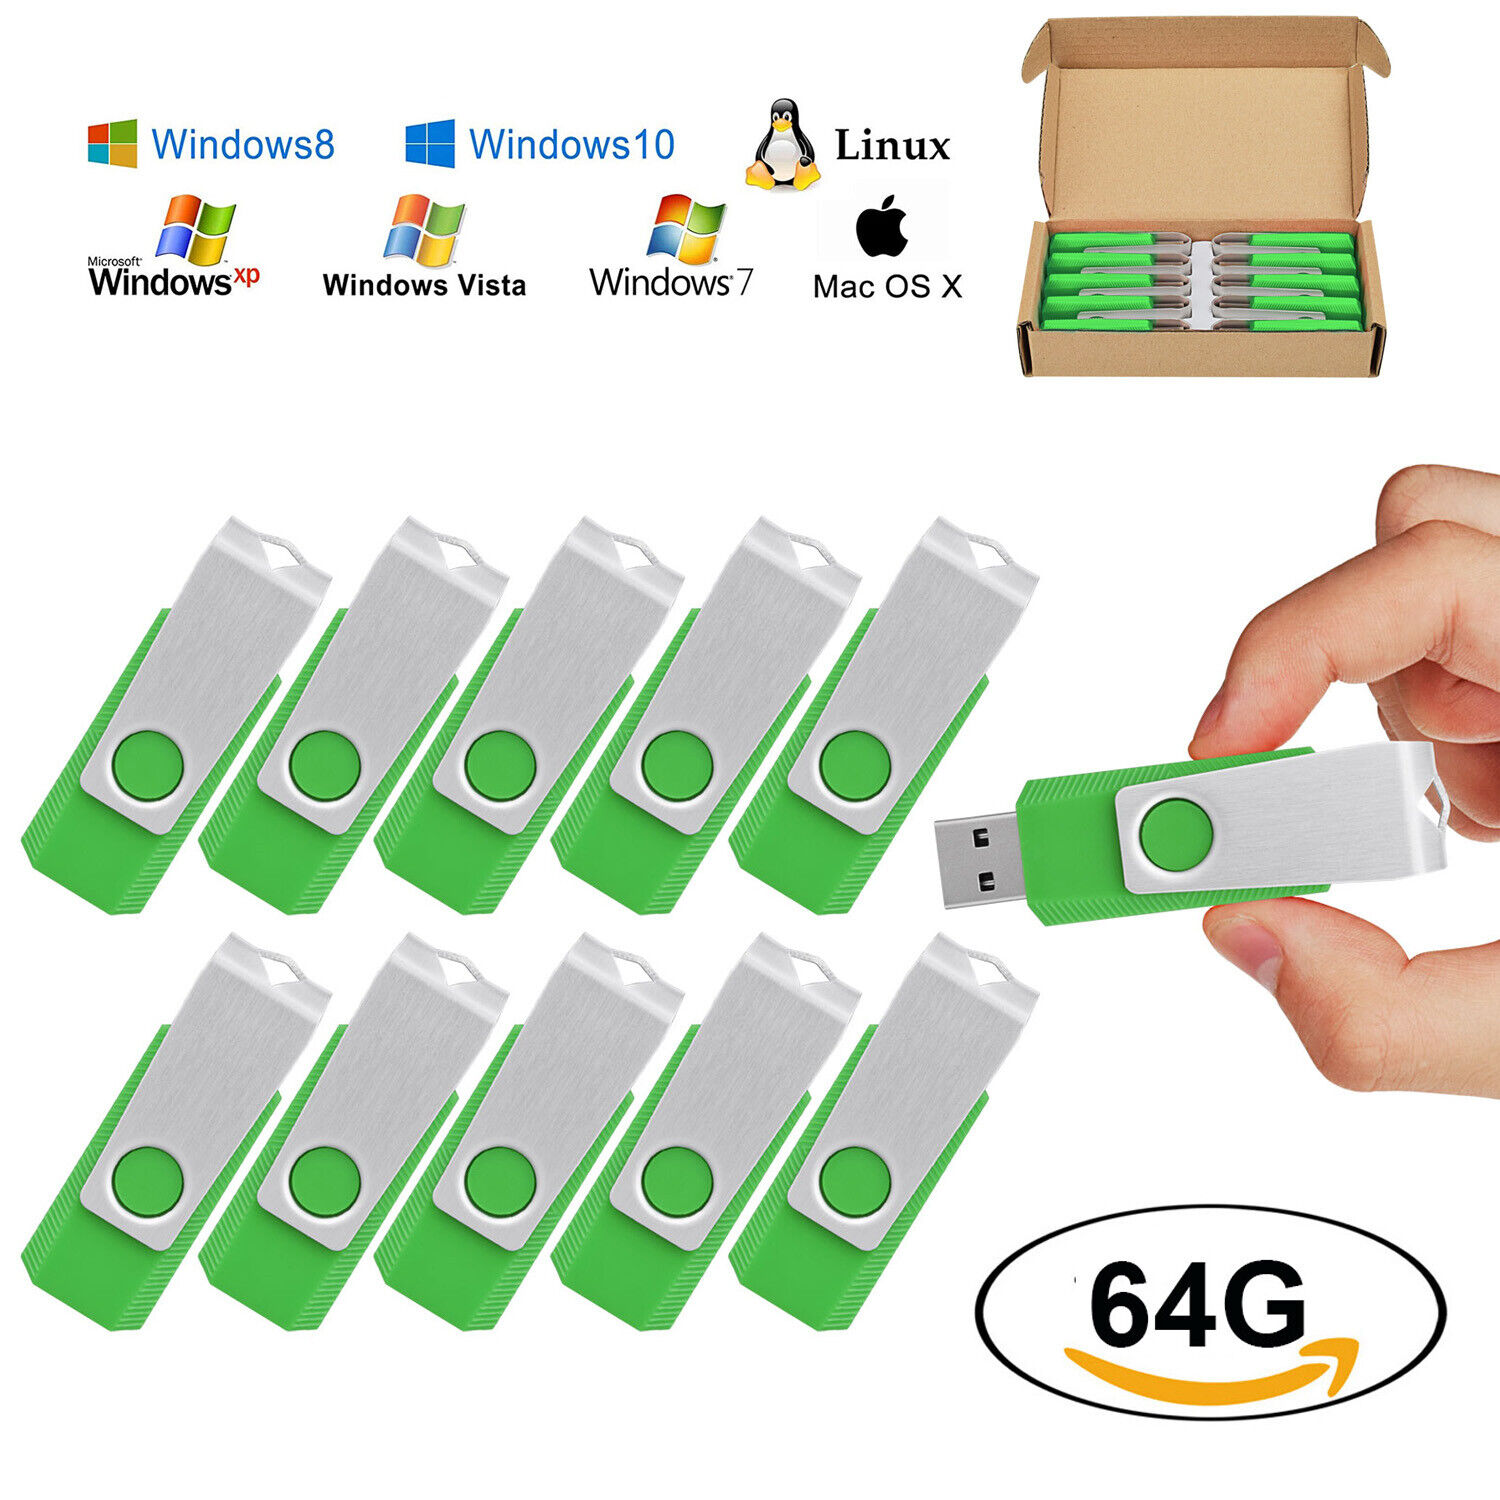 Lot 64GB Green USB Flash Drives Memory Sticks Storage Thumb Drives U Disk Memory